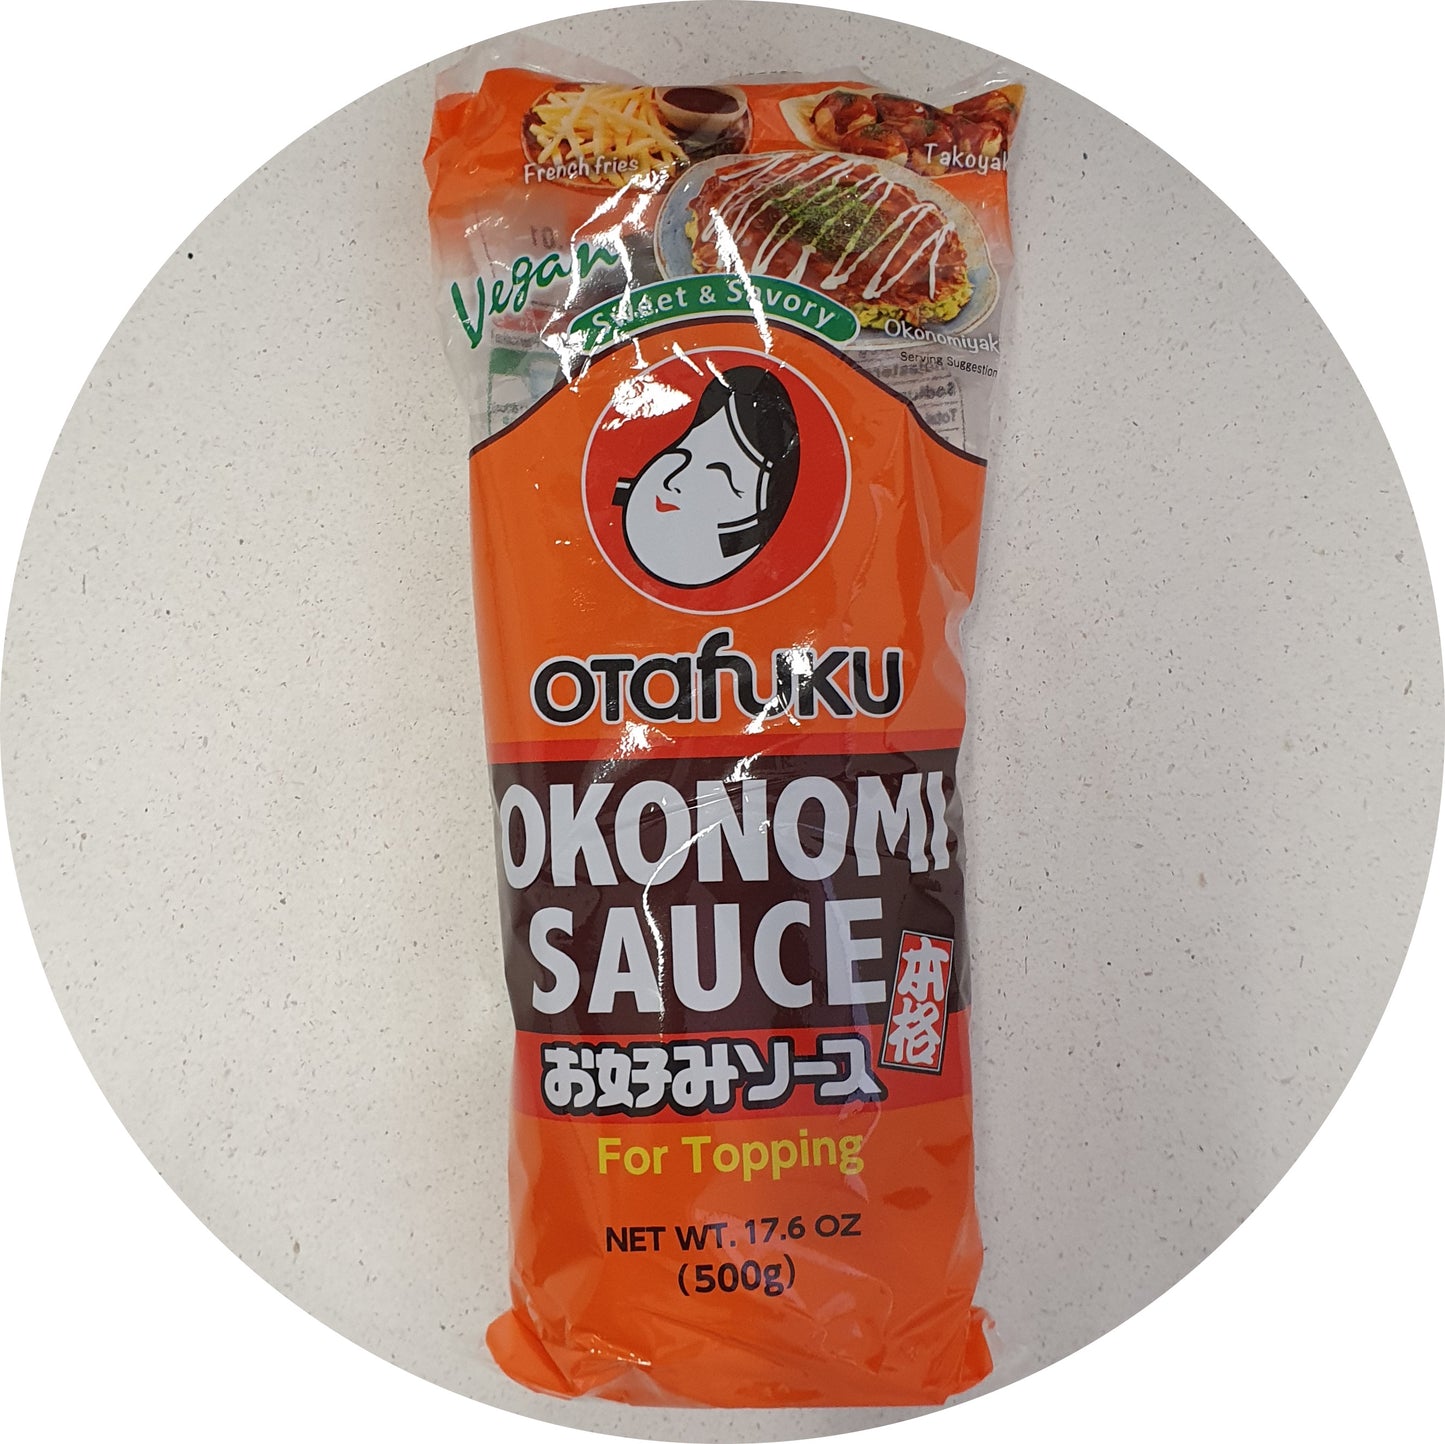 Otafuku Okonomi Sauce 500g